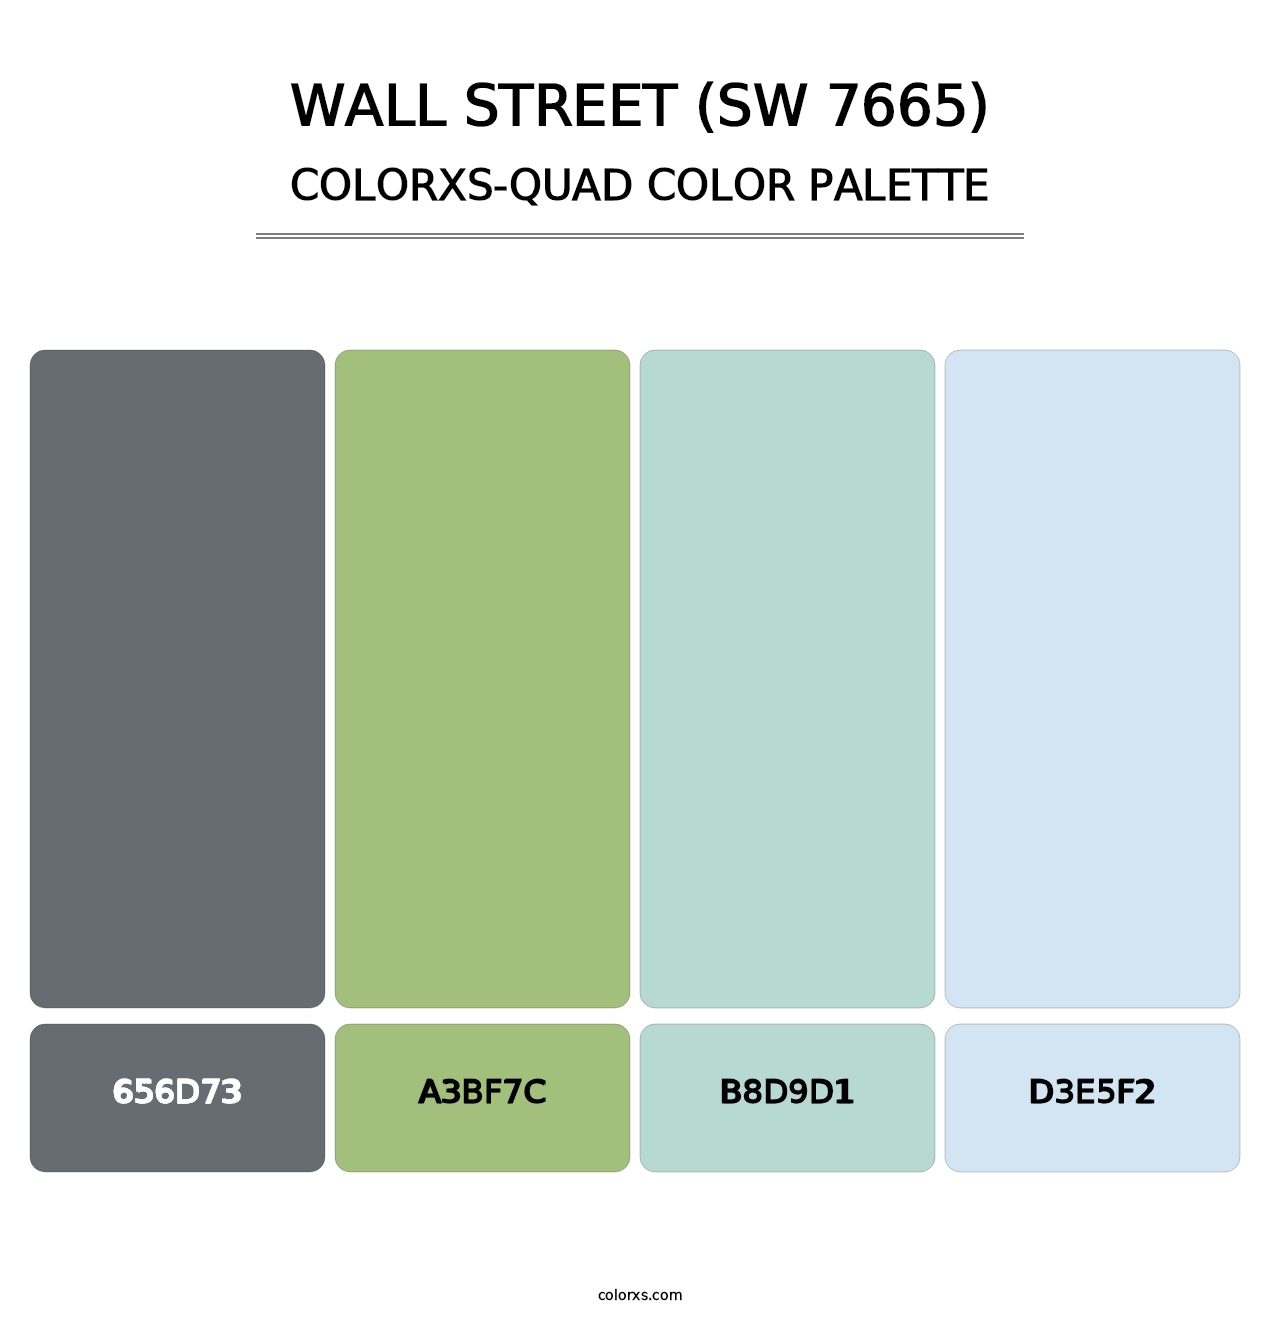 Wall Street (SW 7665) - Colorxs Quad Palette